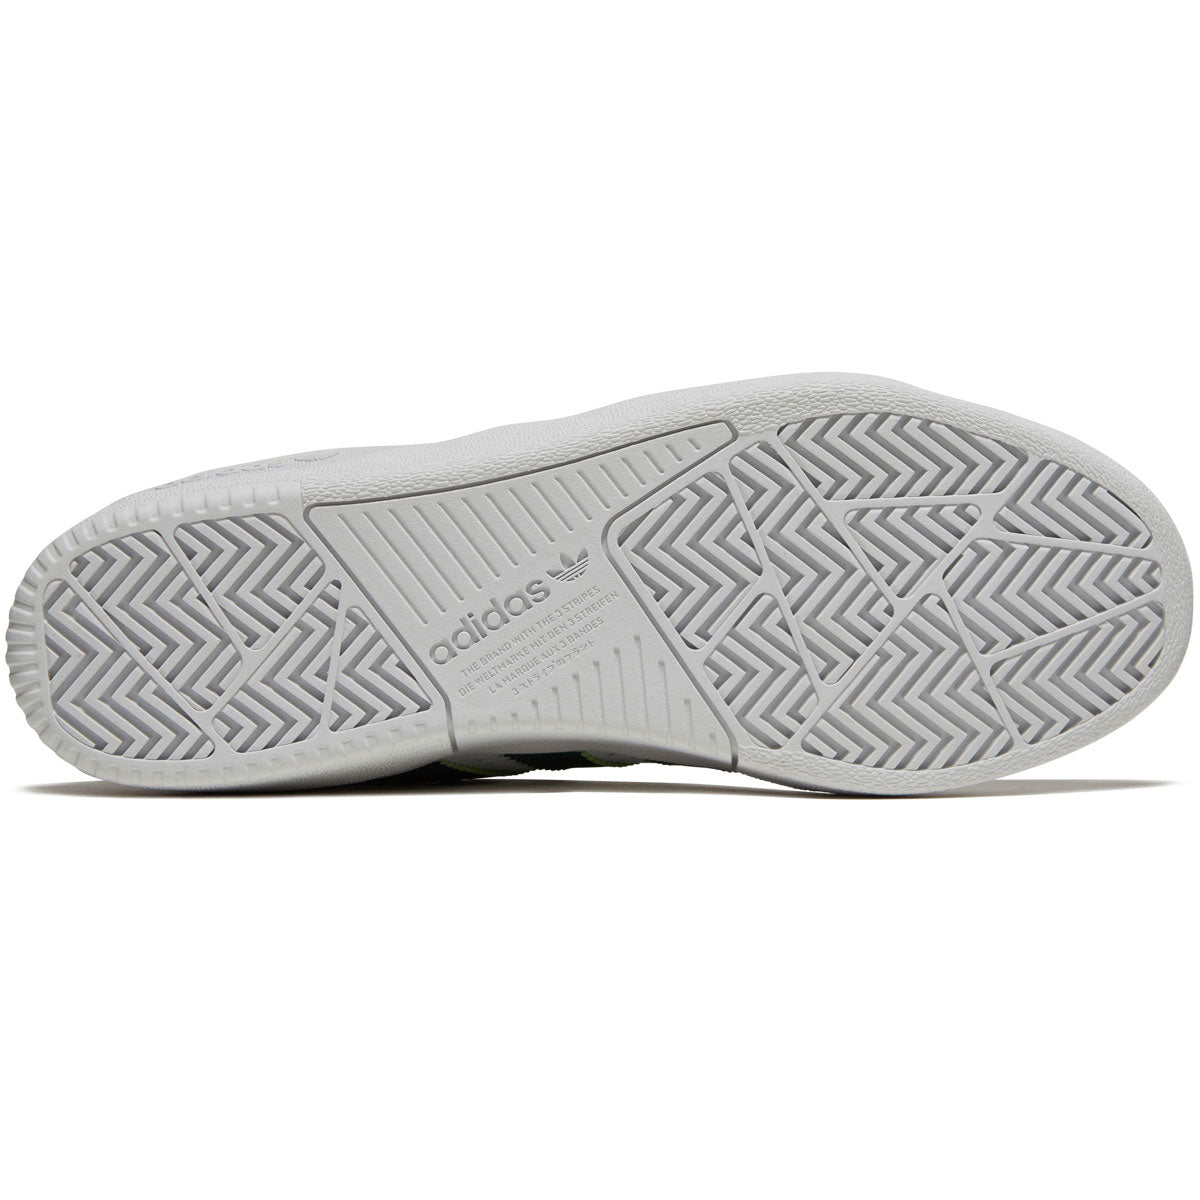 Adidas Tyshawn Shoes - White/Dark Green/Bluebird image 4